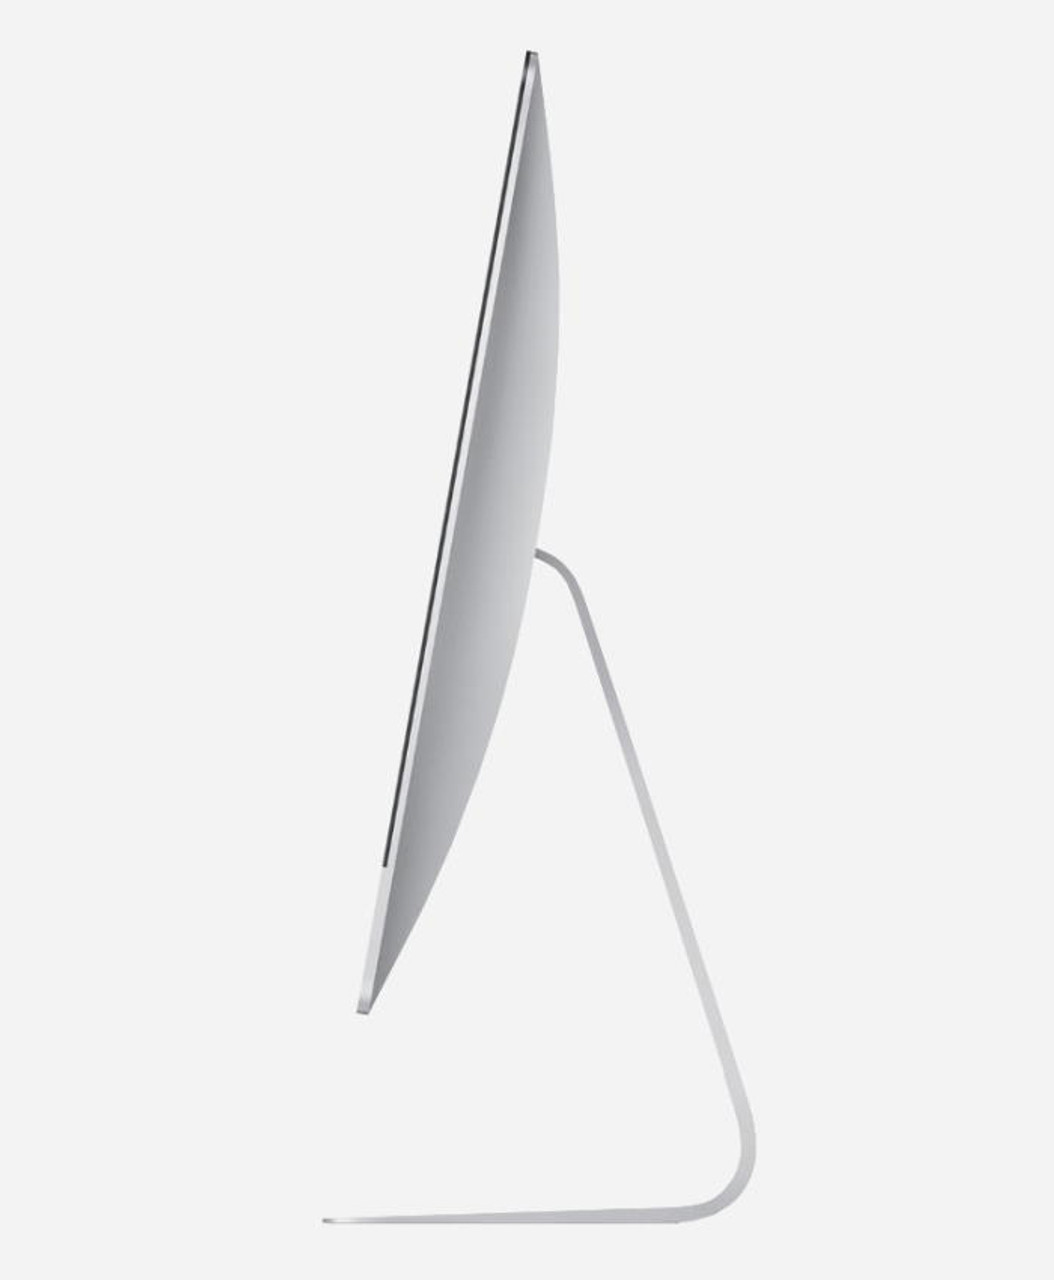 iMac 27-inch (Retina 5K) 3.4GHZ Quad Core i5 (Mid 2017). - Apple MNE92LL/A